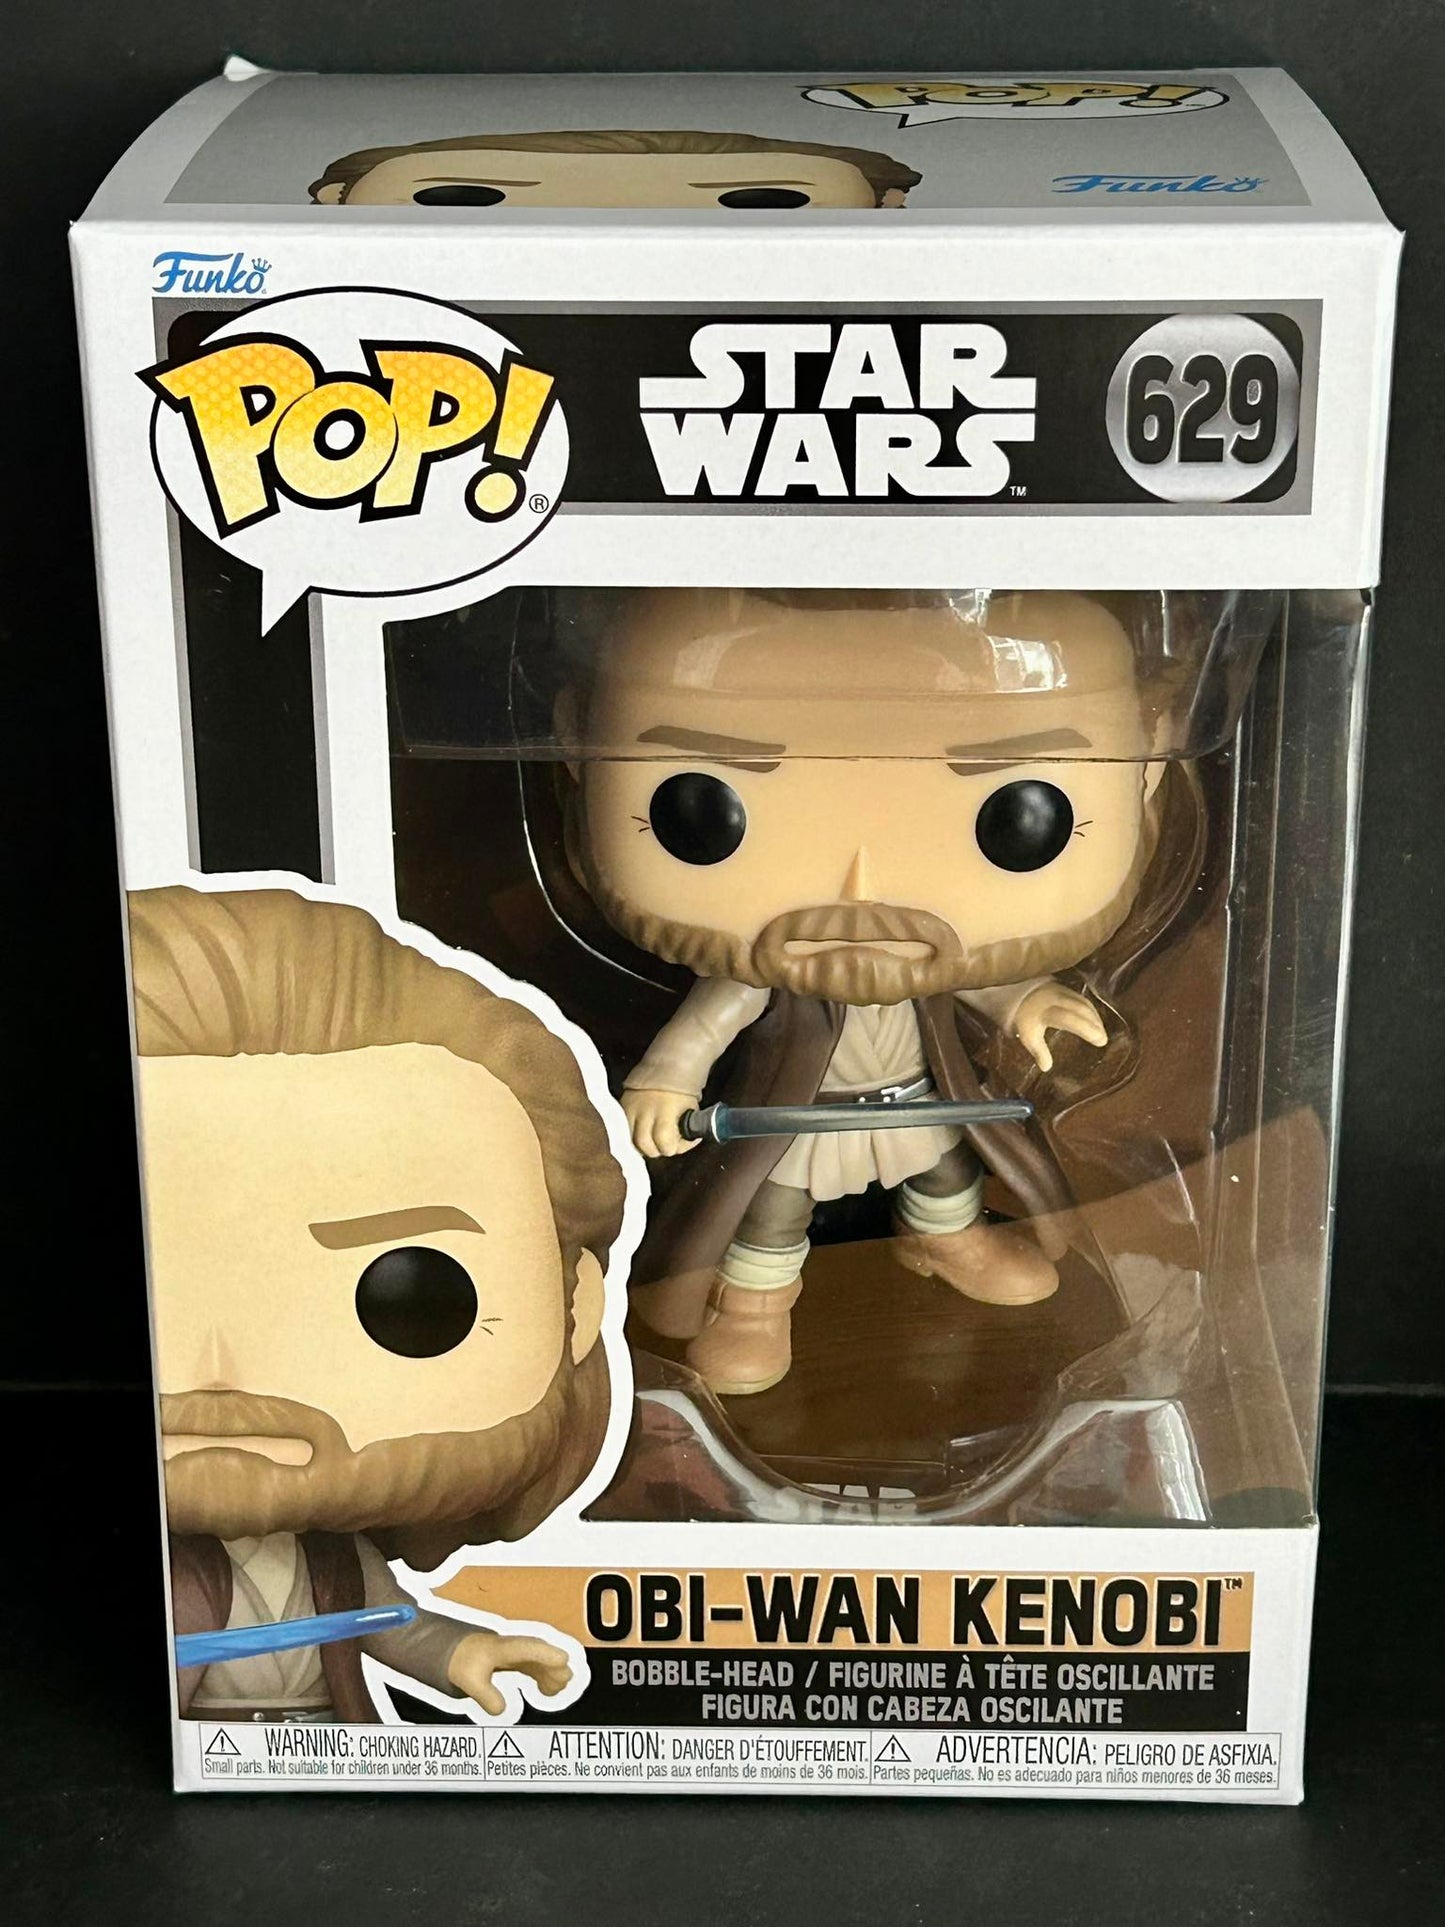 Funko Pop! Star Wars: Obi-Wan Kenobi - Obi-Wan Kenobi (Battle Pose)